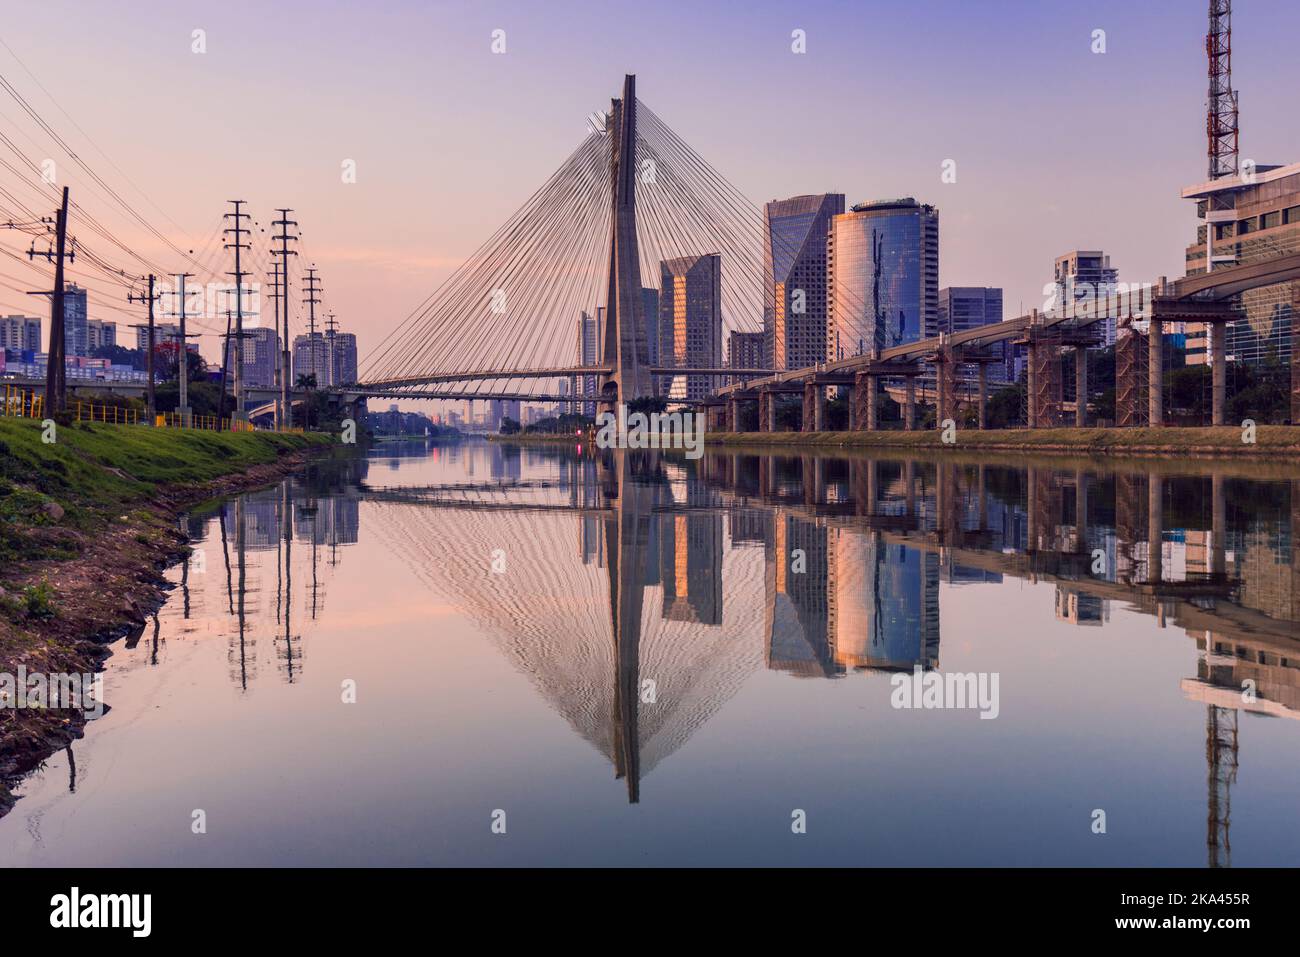 View of Pinheiros River With Modern Buildings Alongside and Famous Octavio Frias de Oliveira Bridge in Sao Paulo City Stock Photo